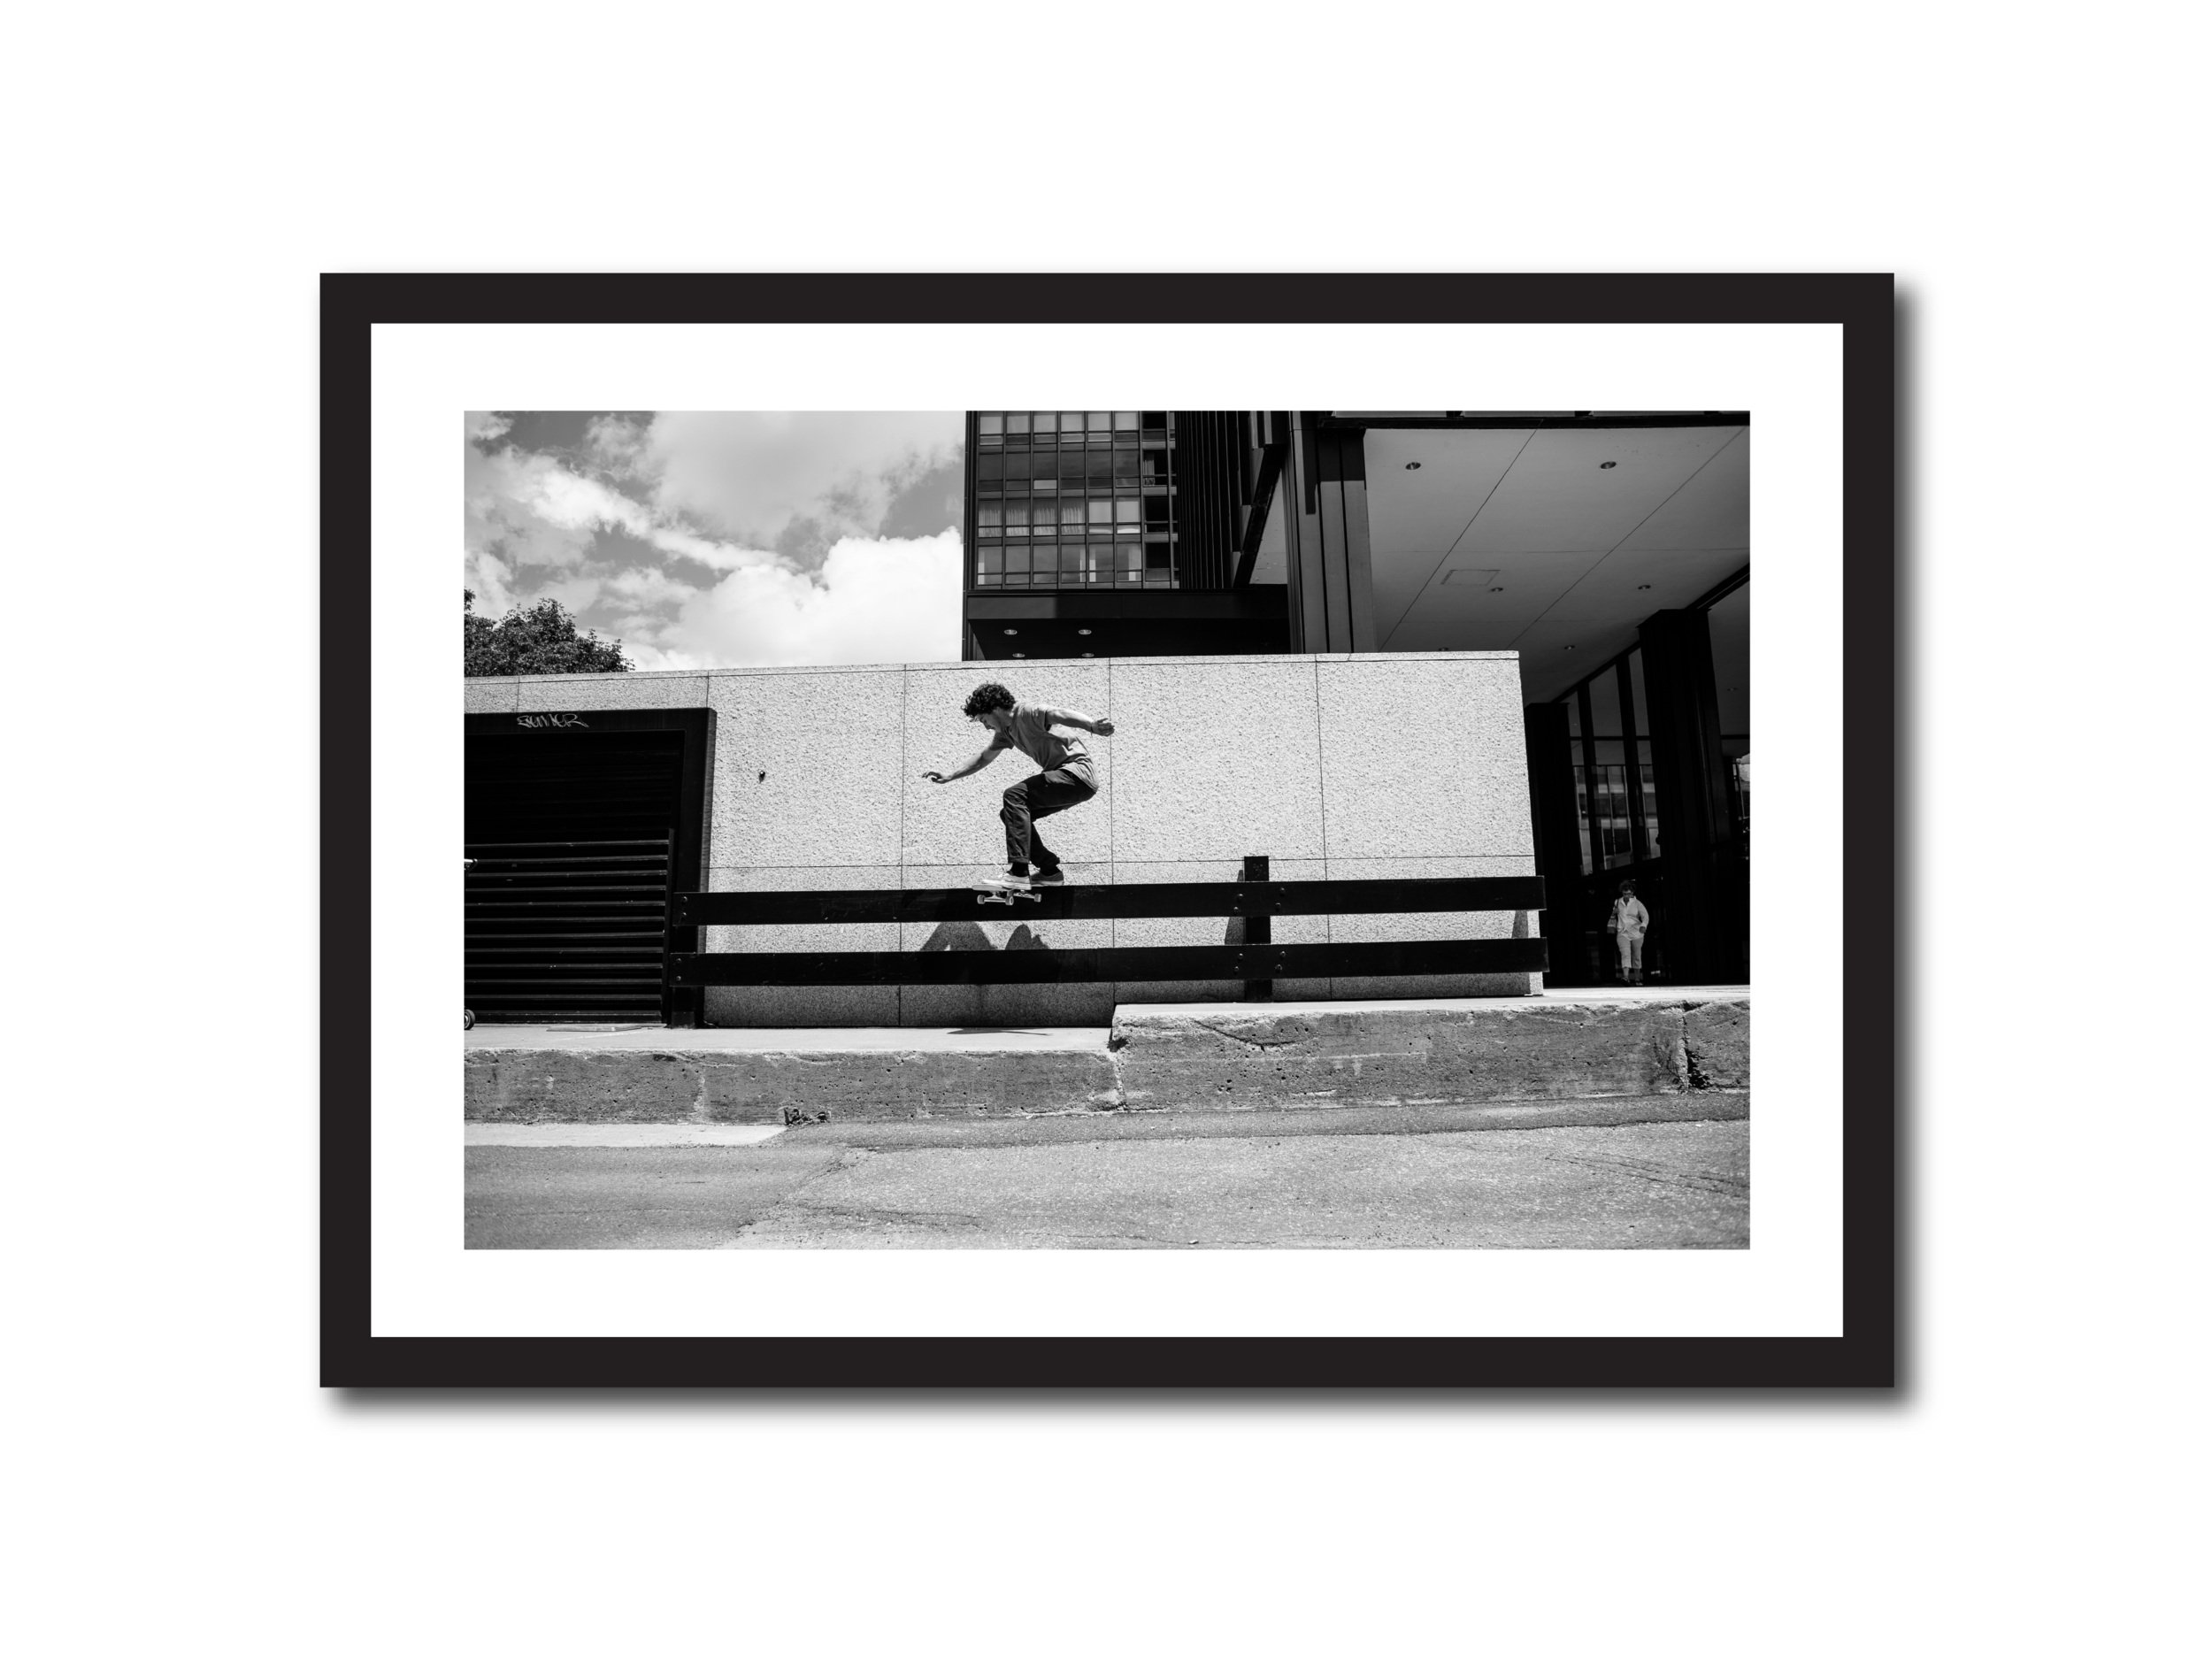 Skateboard+series+08-04.jpg